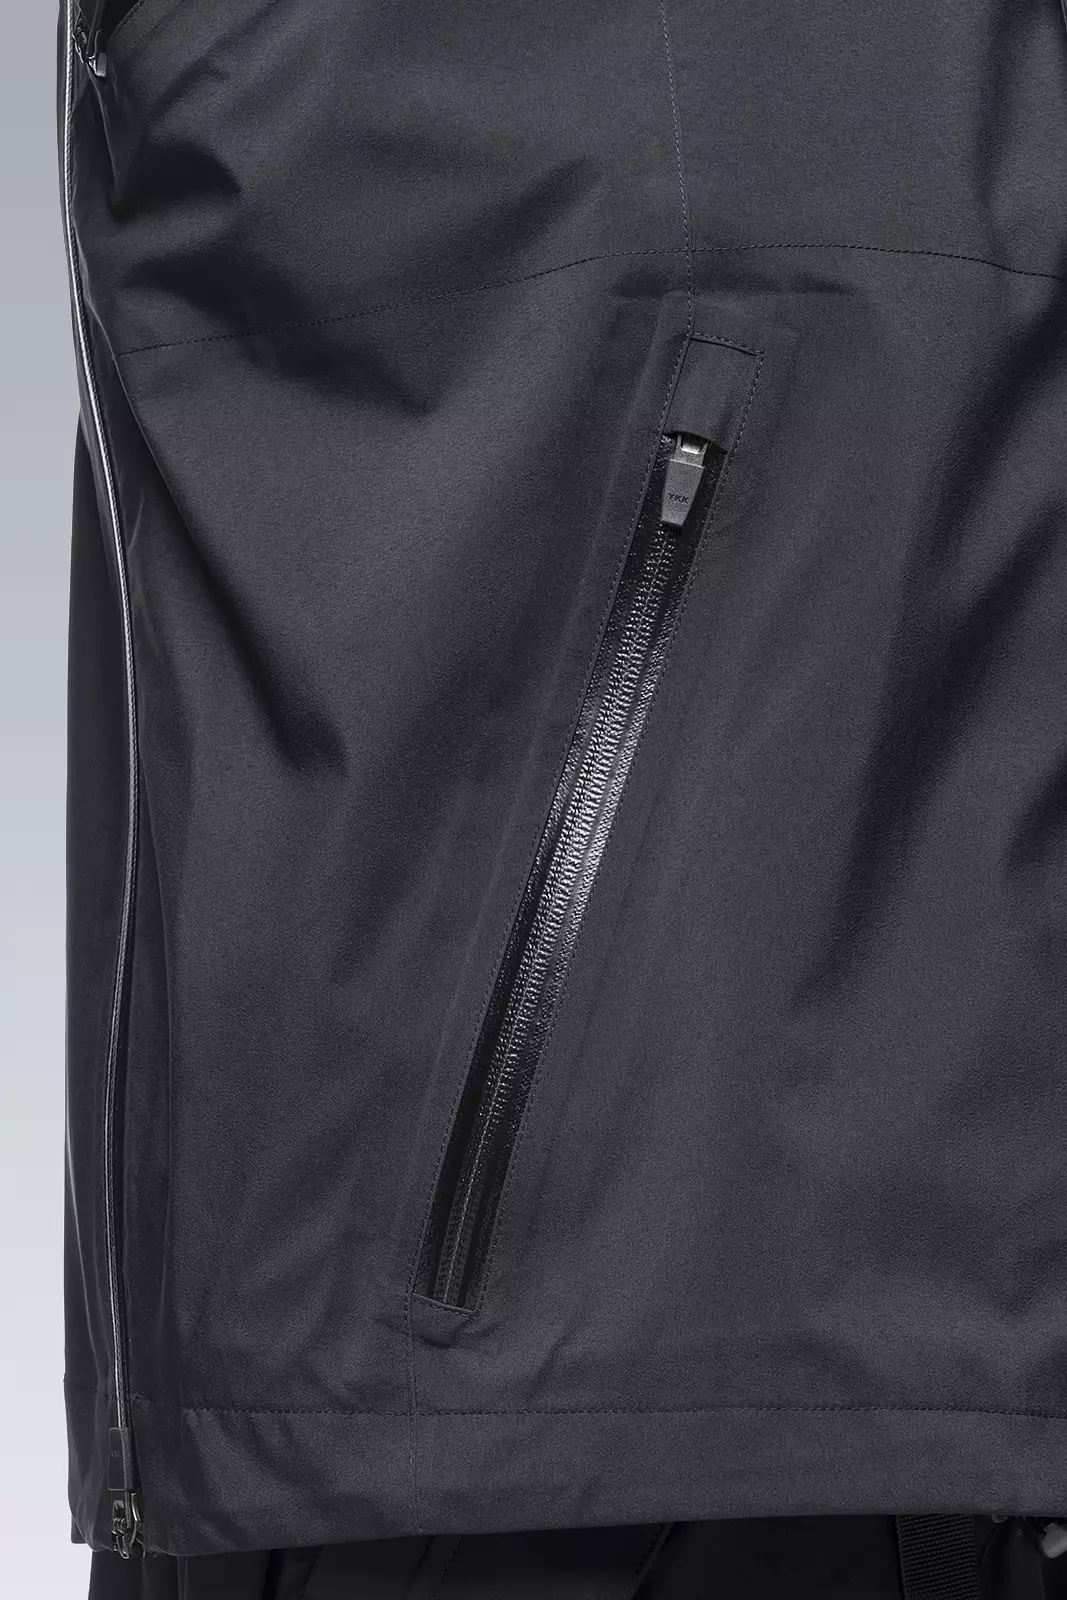 J1A-GTKR-BKS KR EX 3L Gore-Tex® Pro Interops Jacket Black with size 5 WR zippers in gloss black - 28